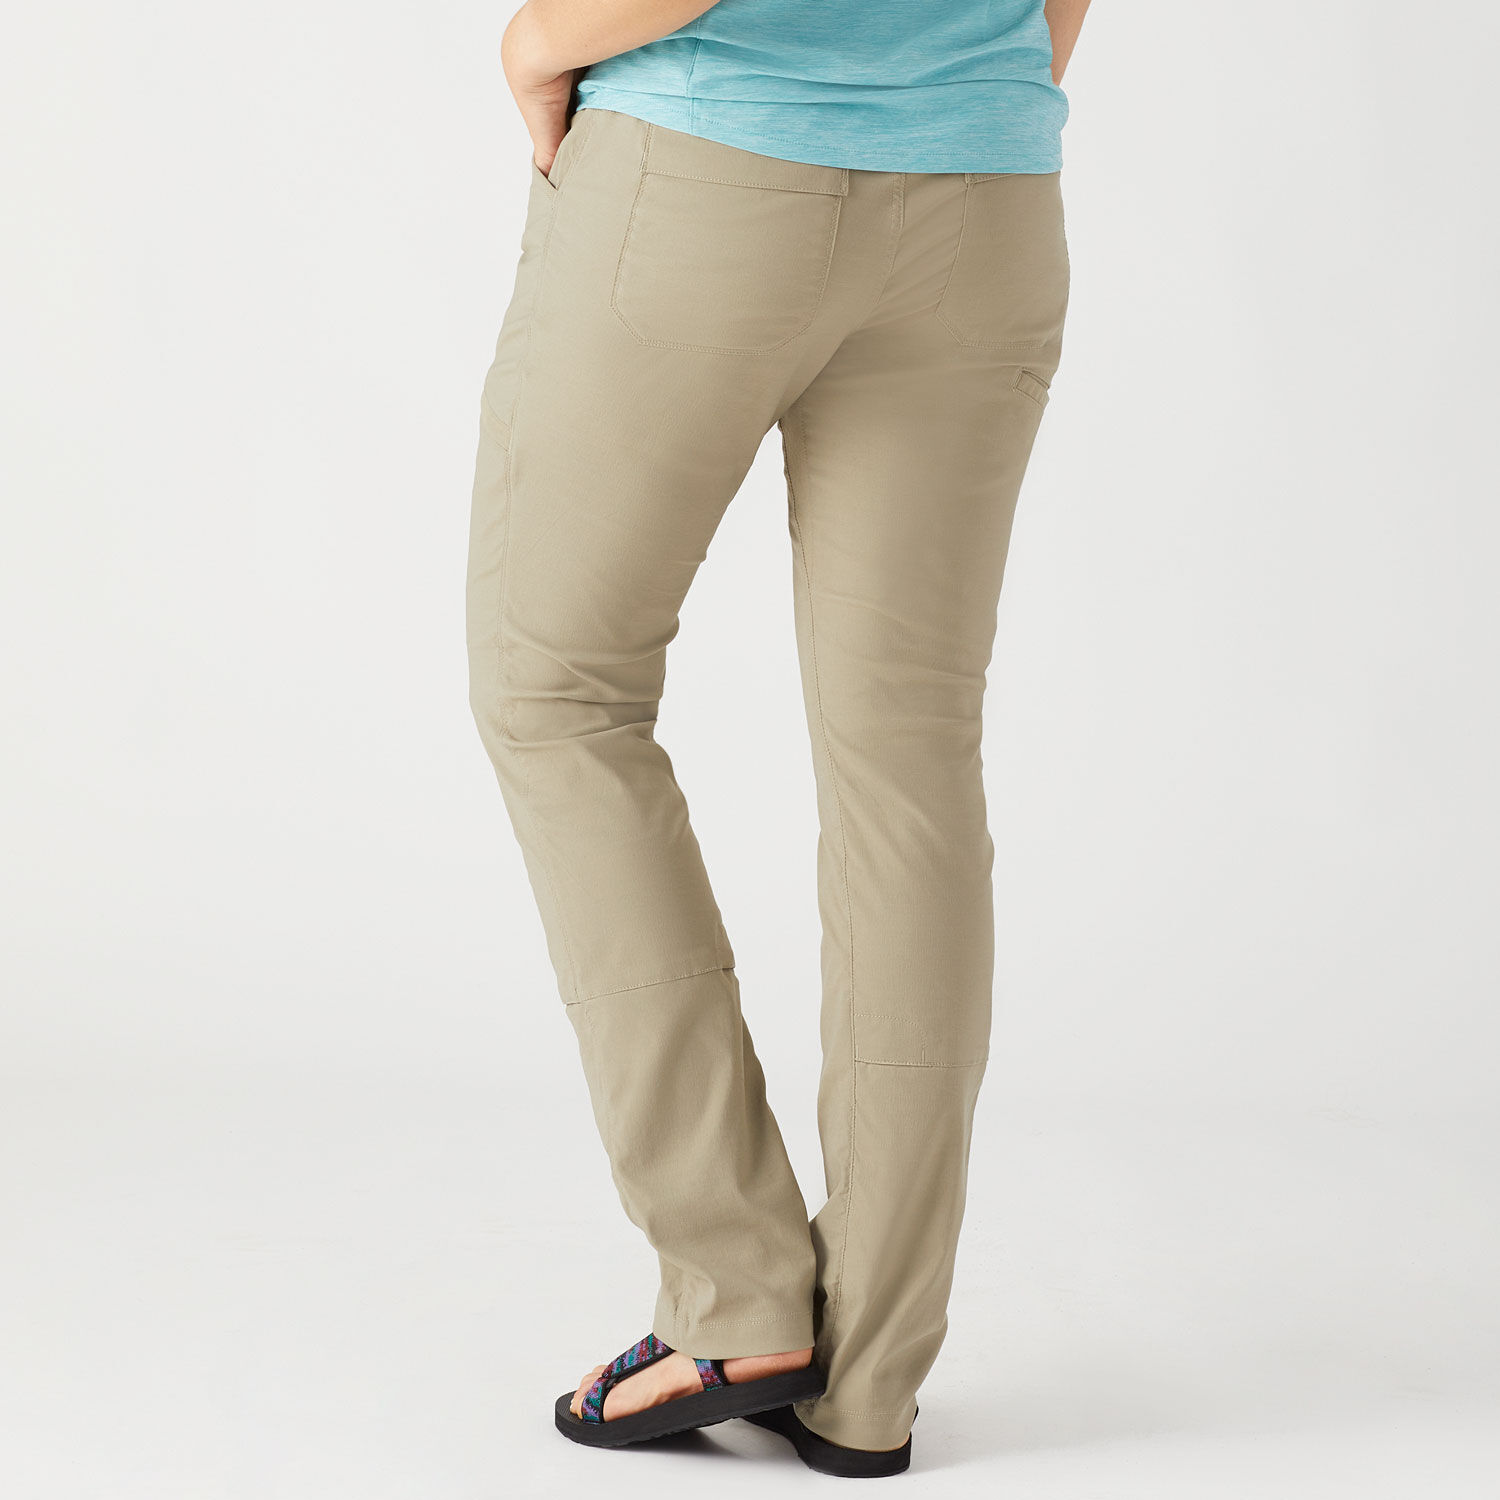 Women's High-Rise Khaki Super Skinny Pants | Women's Bottoms |  HollisterCo.com